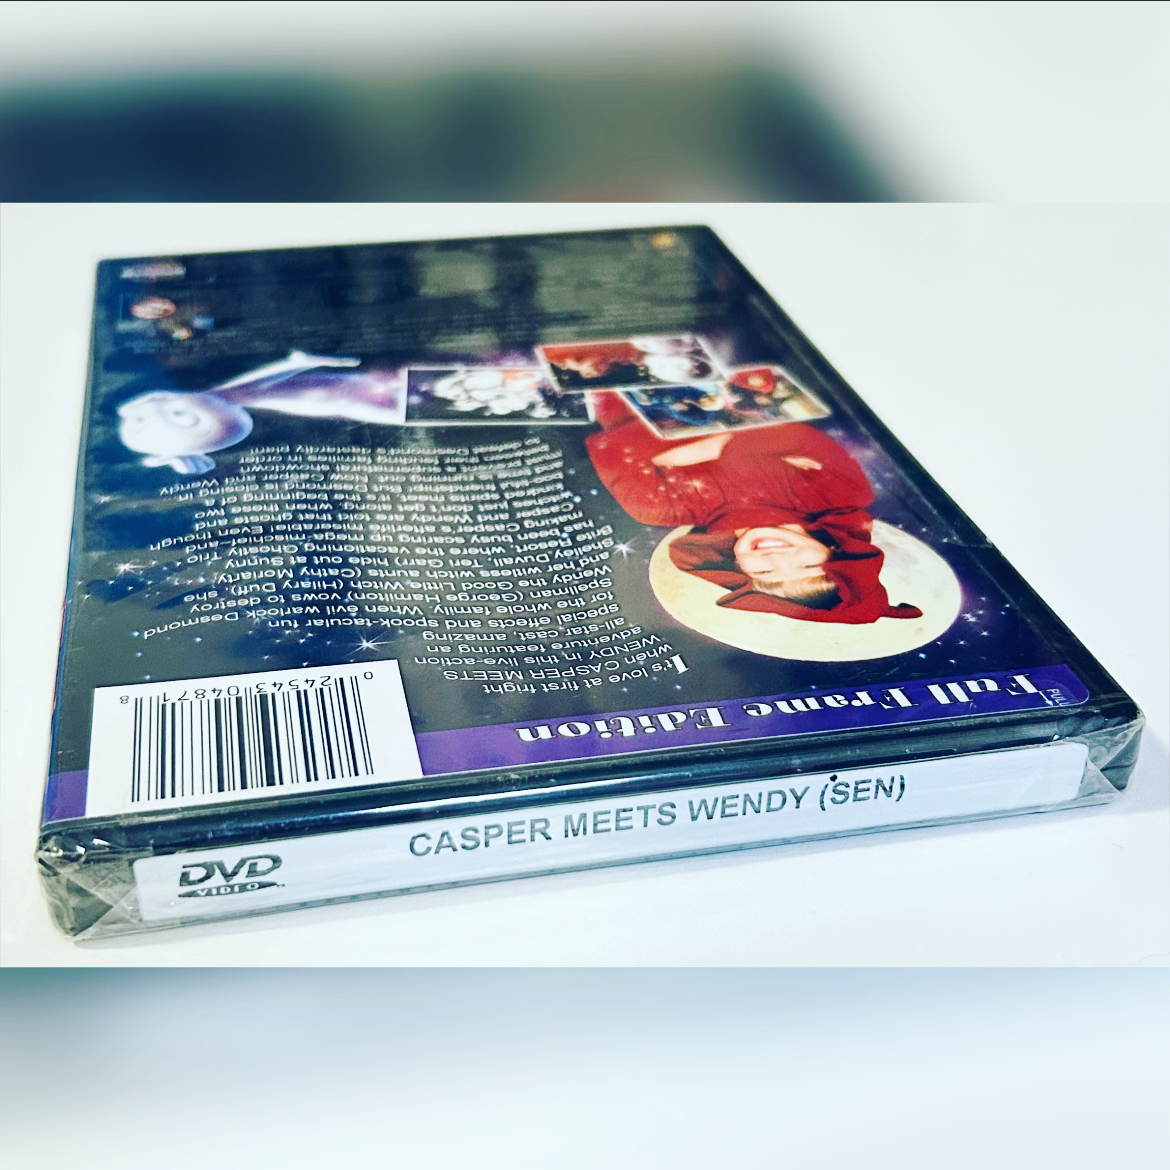 #NewArrival! Casper Meets Wendy (DVD 2005) Full Frame Hilary Duff RARE OOP Fox Brand NEW

rareflicksplus.com/all-products/o…

#CasperMeetsWendy #Casper #CasperTheFriendlyGhost #HilaryDuff #Fox #DVD #DVDs #PhysicalMedia #Flashback #DvdWebsite #DvdStore #raredvd #raremovies #oopdvd #htf